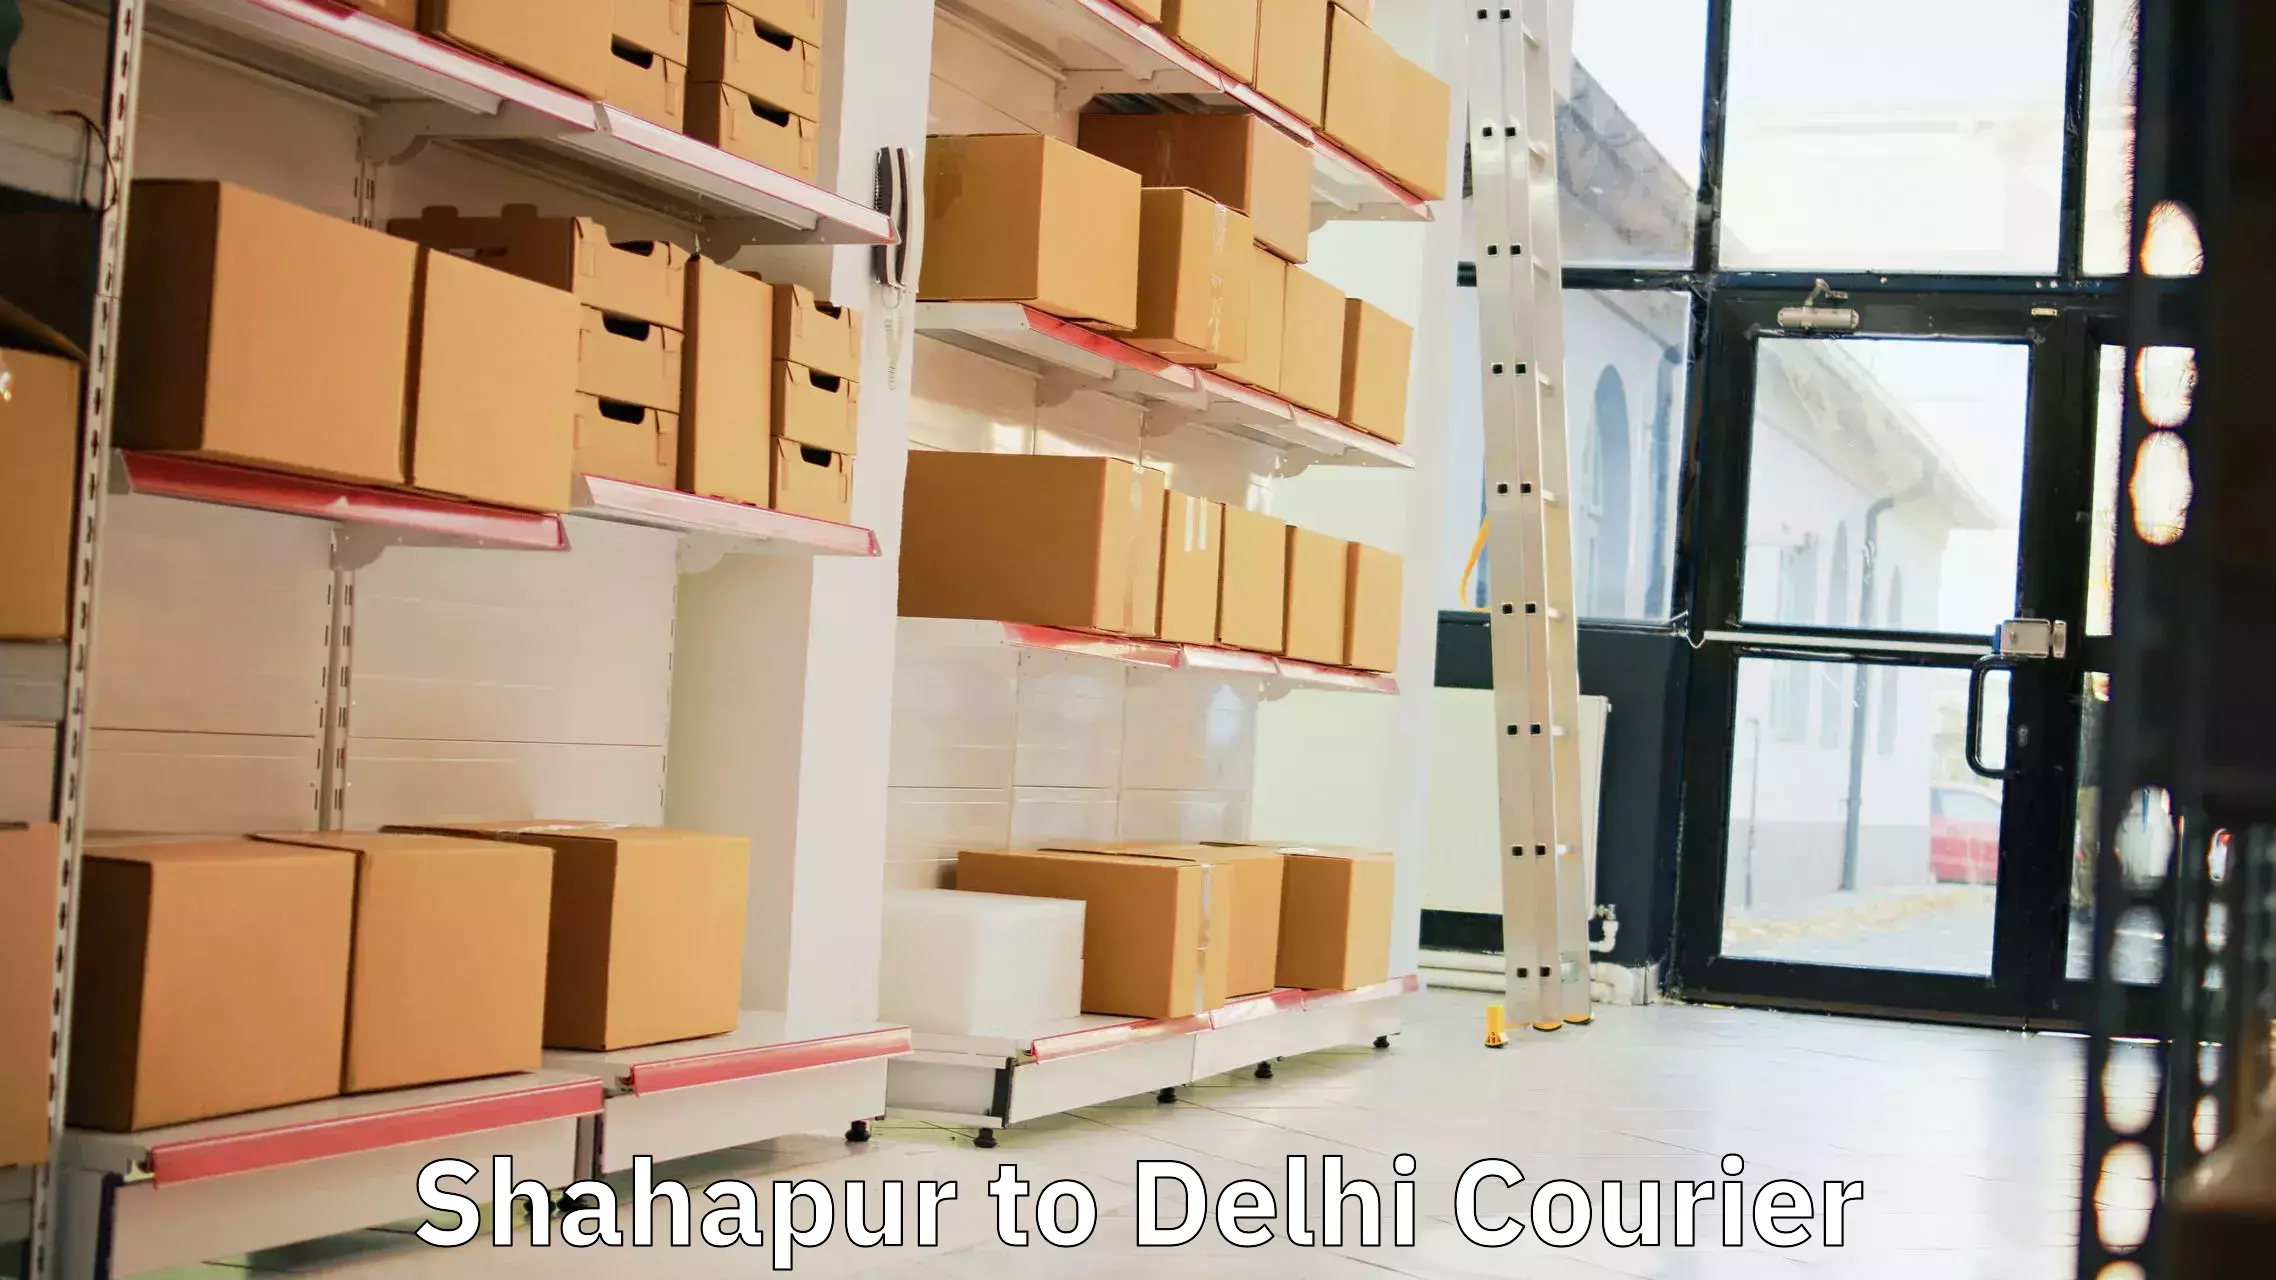 Courier service partnerships Shahapur to Delhi